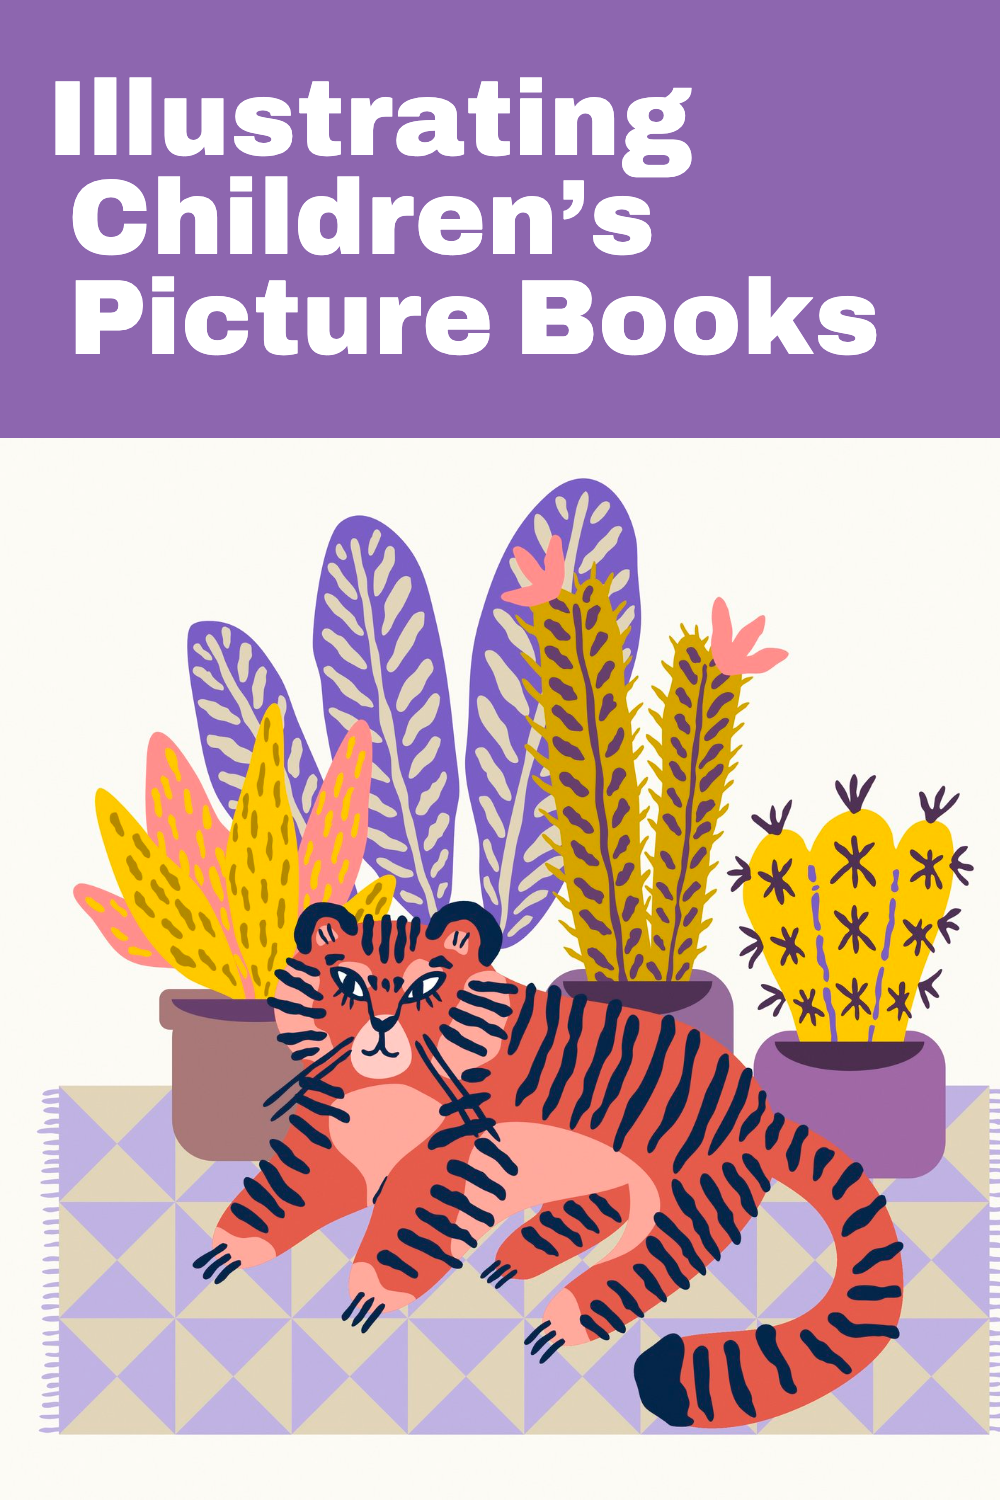 illustrating childrens picture books affinity designer_1.png